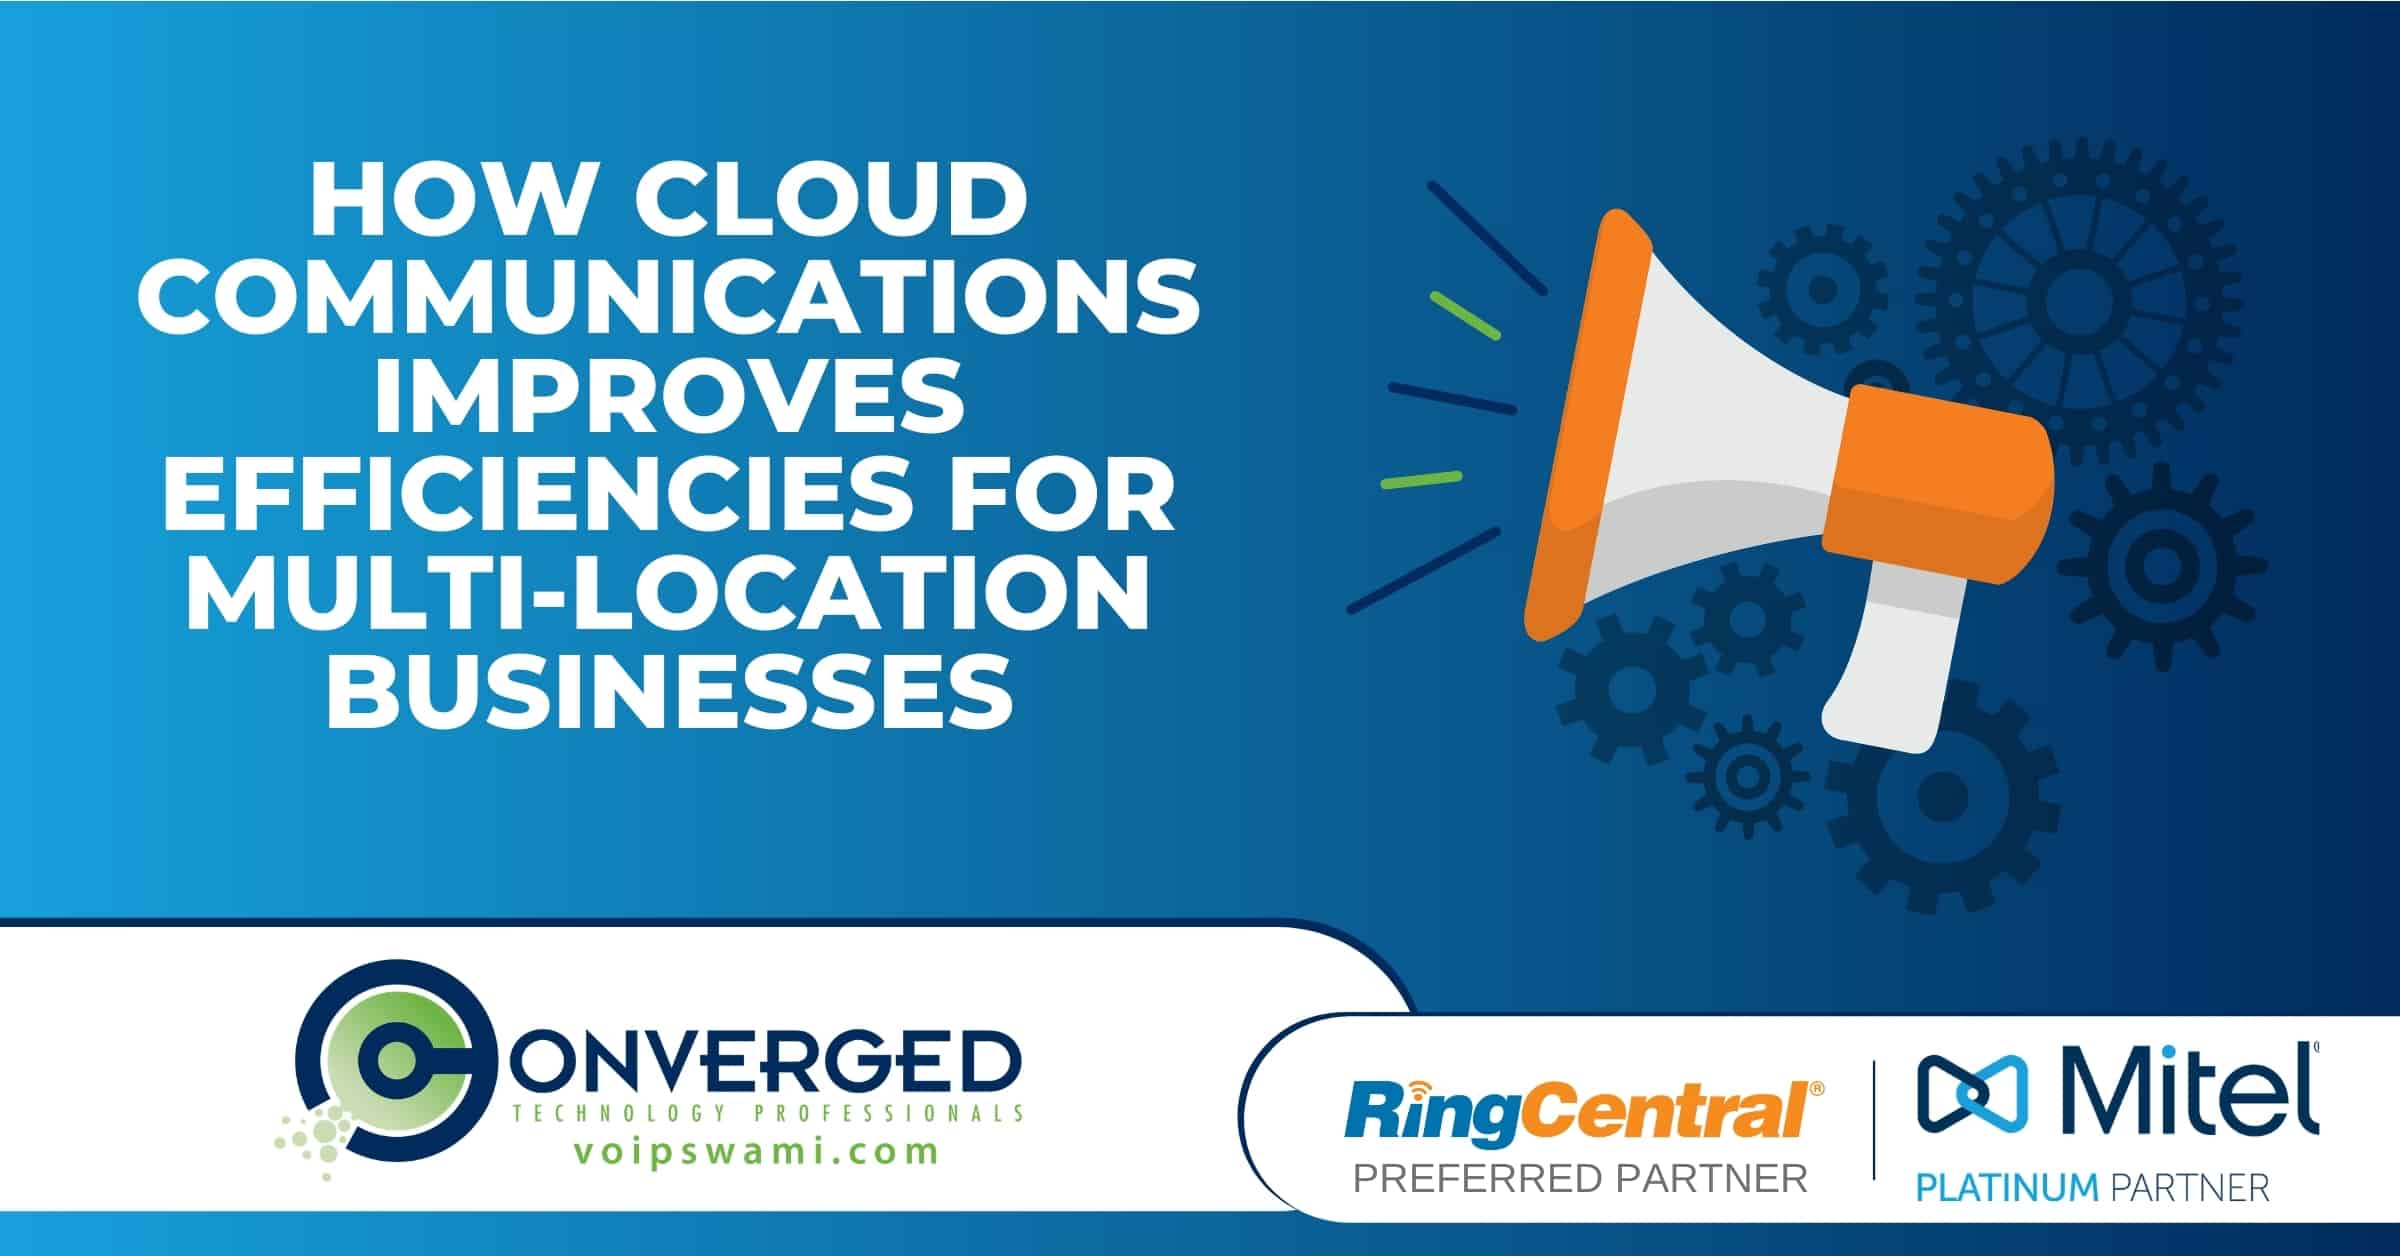 How Cloud Communications Improves Efficiencies for Multi-Location Businesses